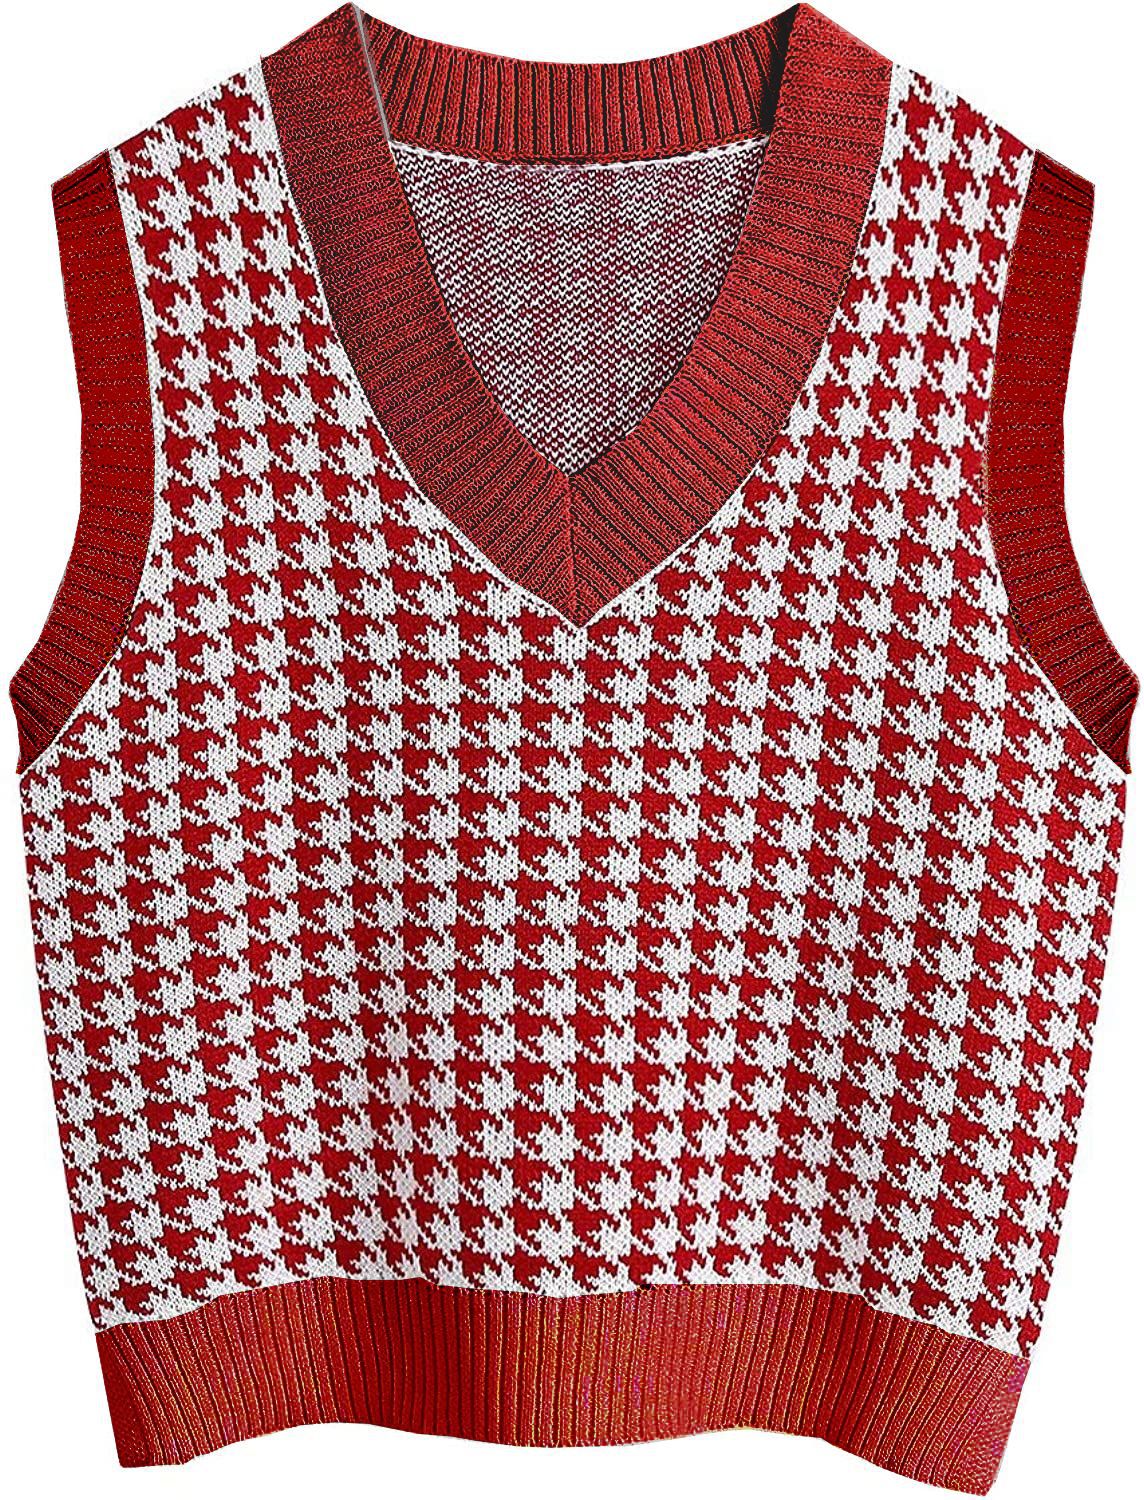 Ares - Dark Academia Houndstooth Knitted Sweater Vest - TheDarkAcademic